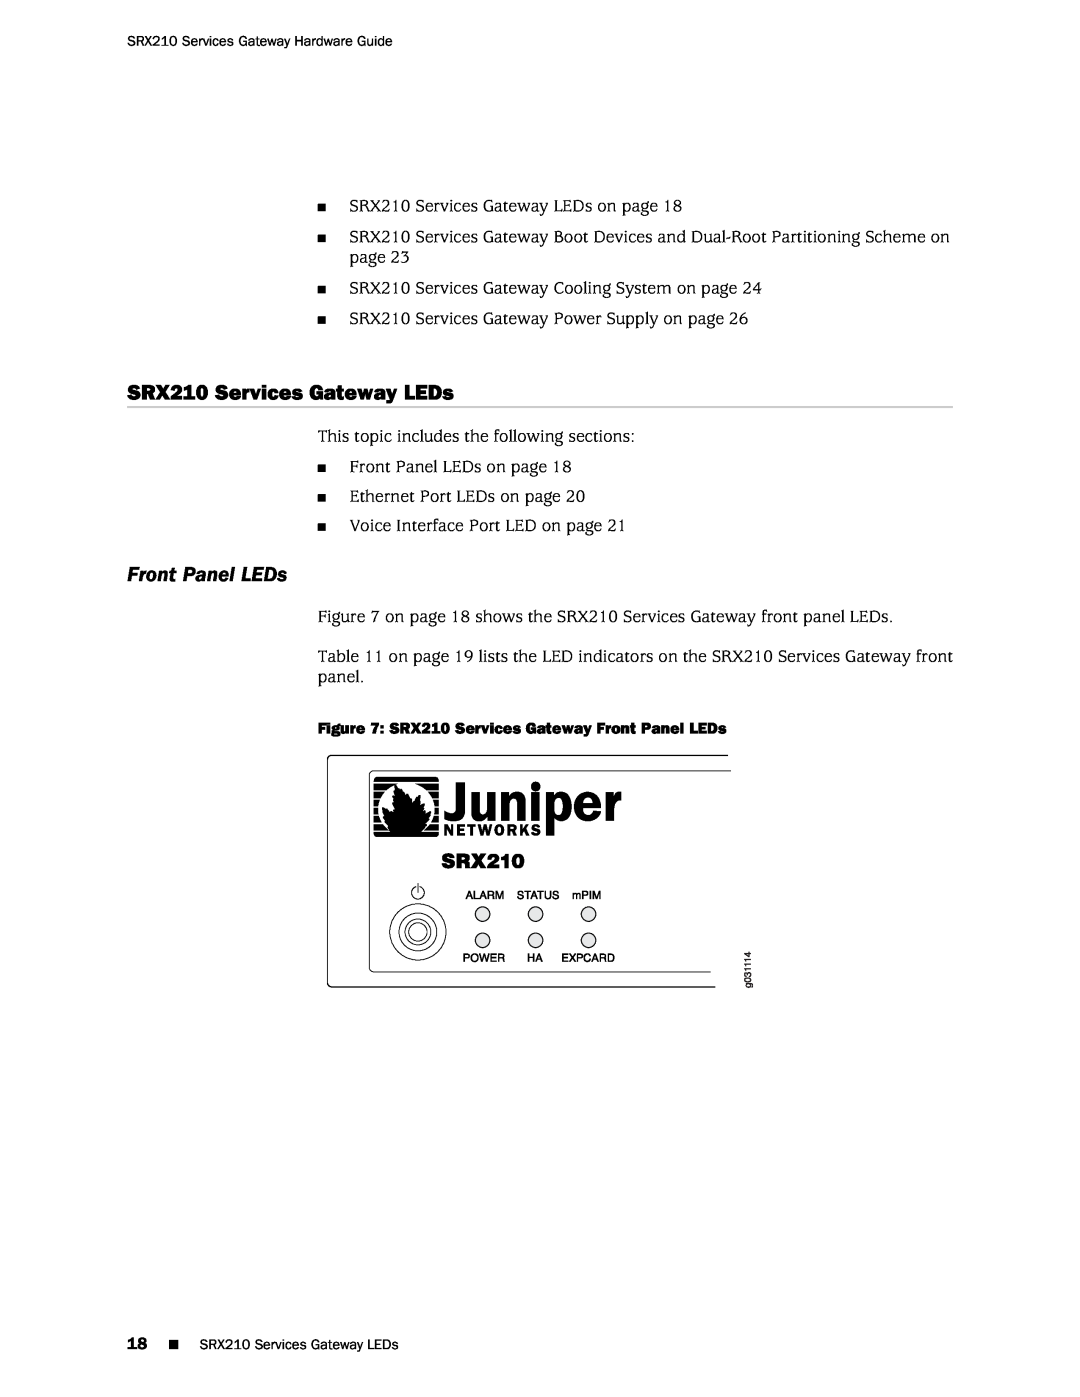 Juniper Networks SRX 210 manual SRX210 Services Gateway LEDs, Front Panel LEDs 